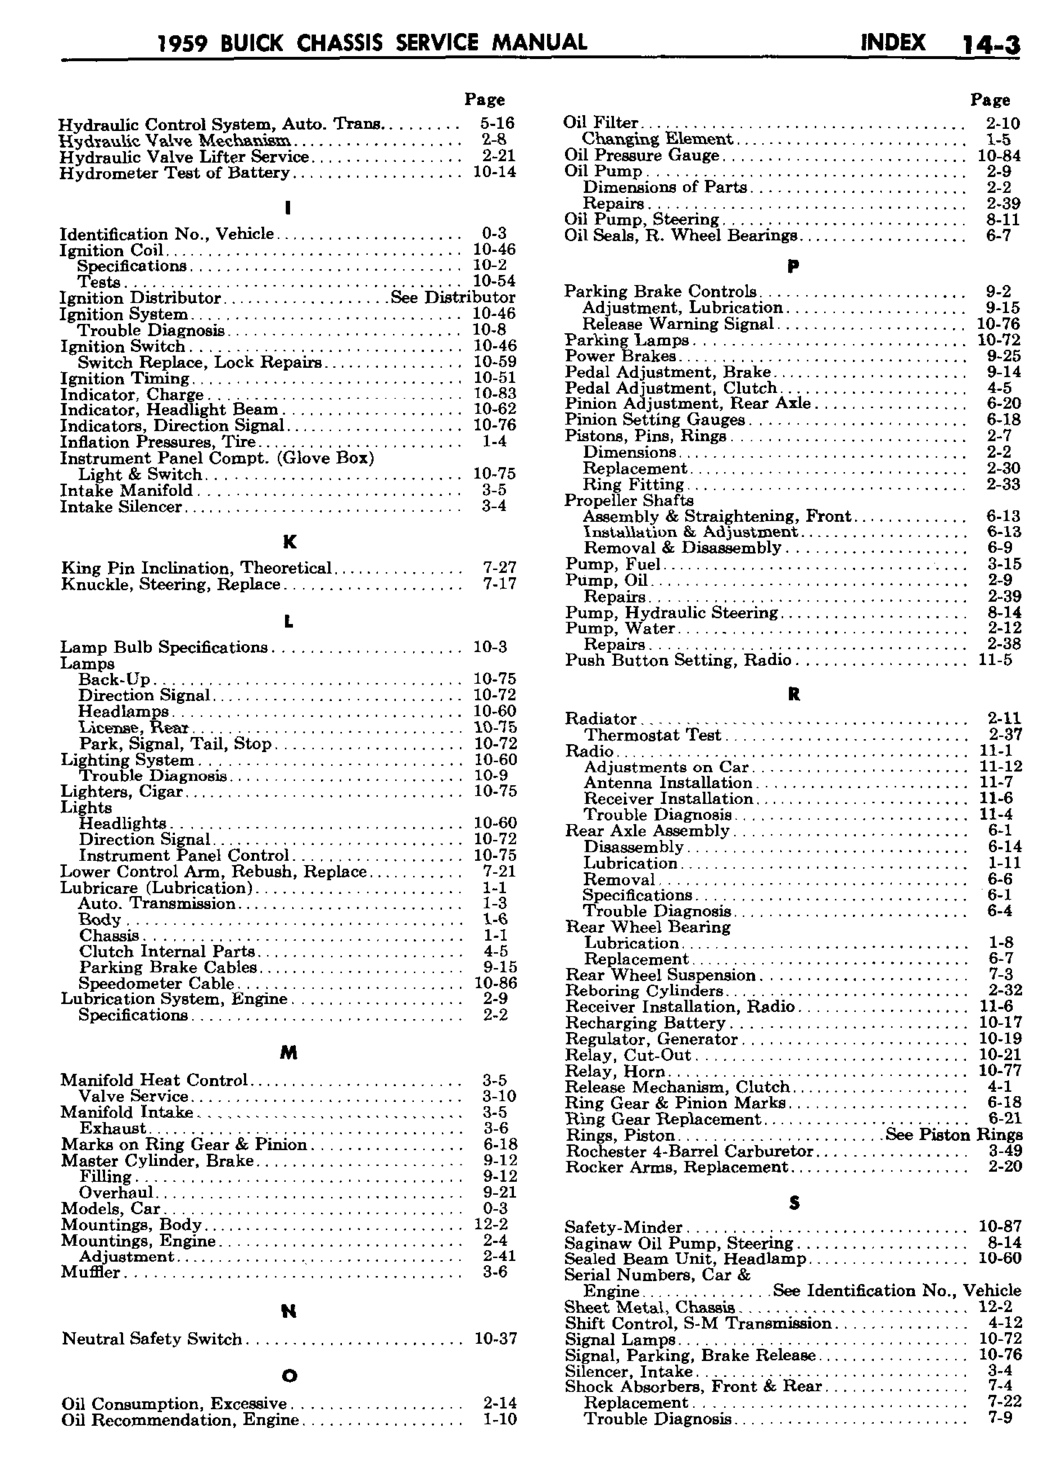 n_14 1959 Buick Shop Manual - Index-003-003.jpg